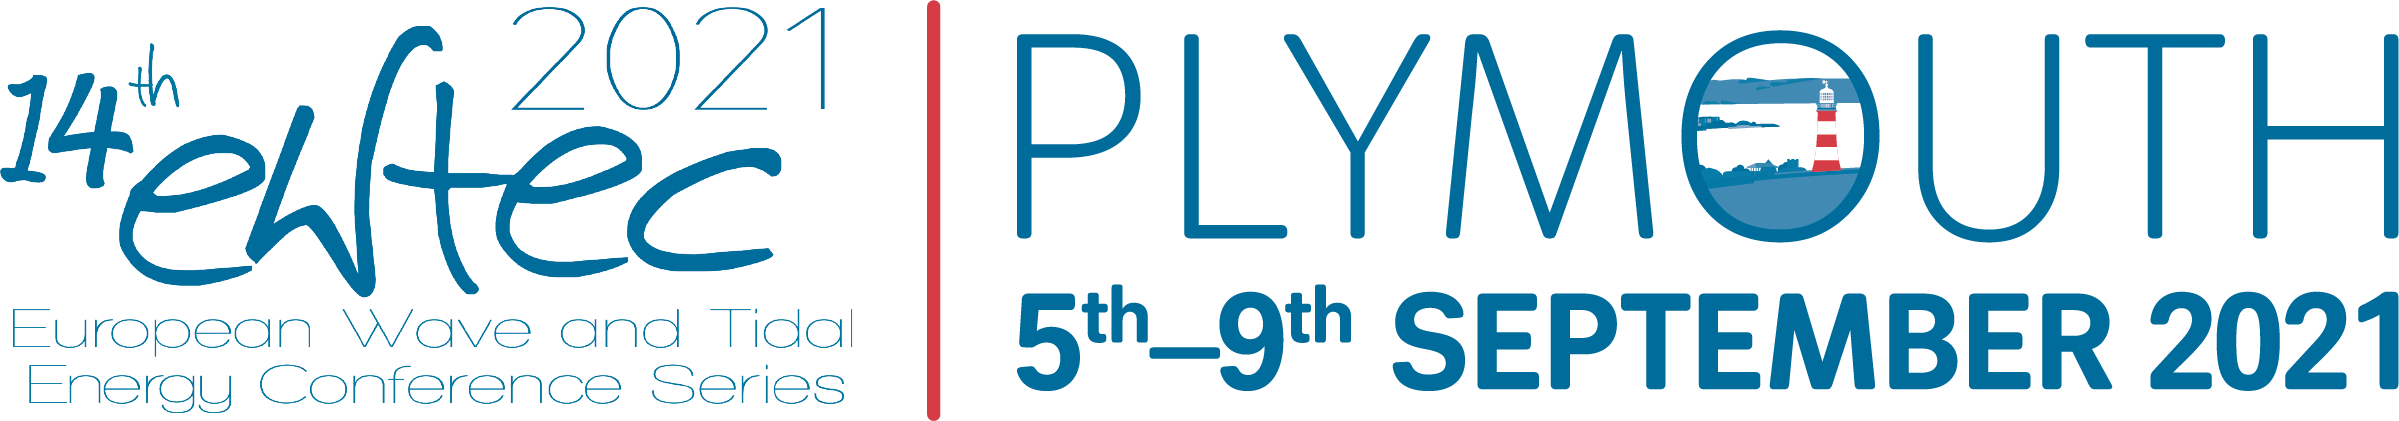 Logo of 14th EWTEC 2021 in Plymouth